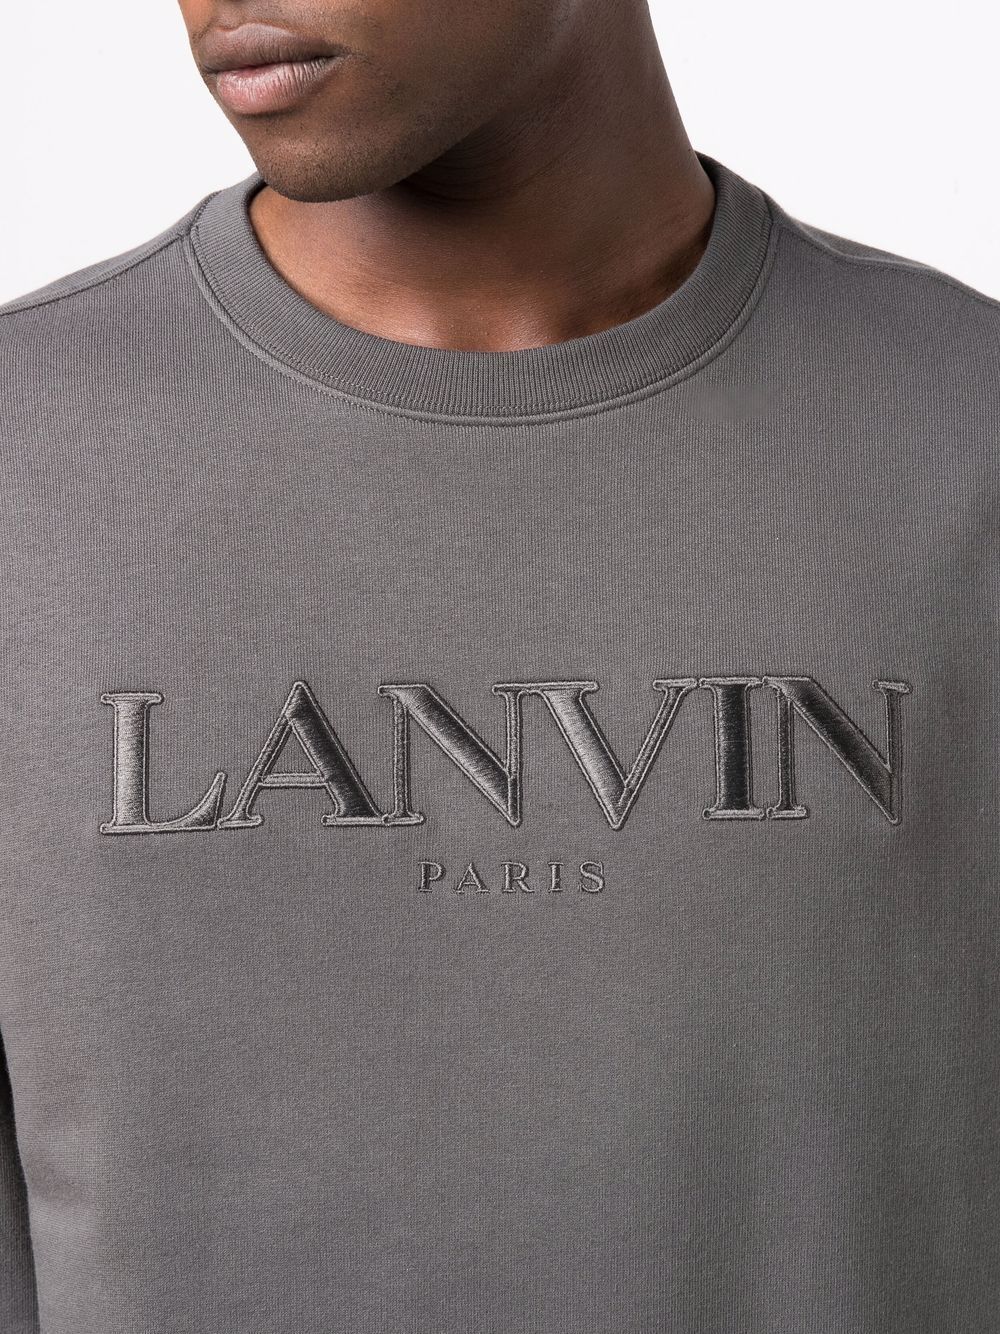 LANVIN Embroidered Logo Sweatshirt Grey - MAISONDEFASHION.COM